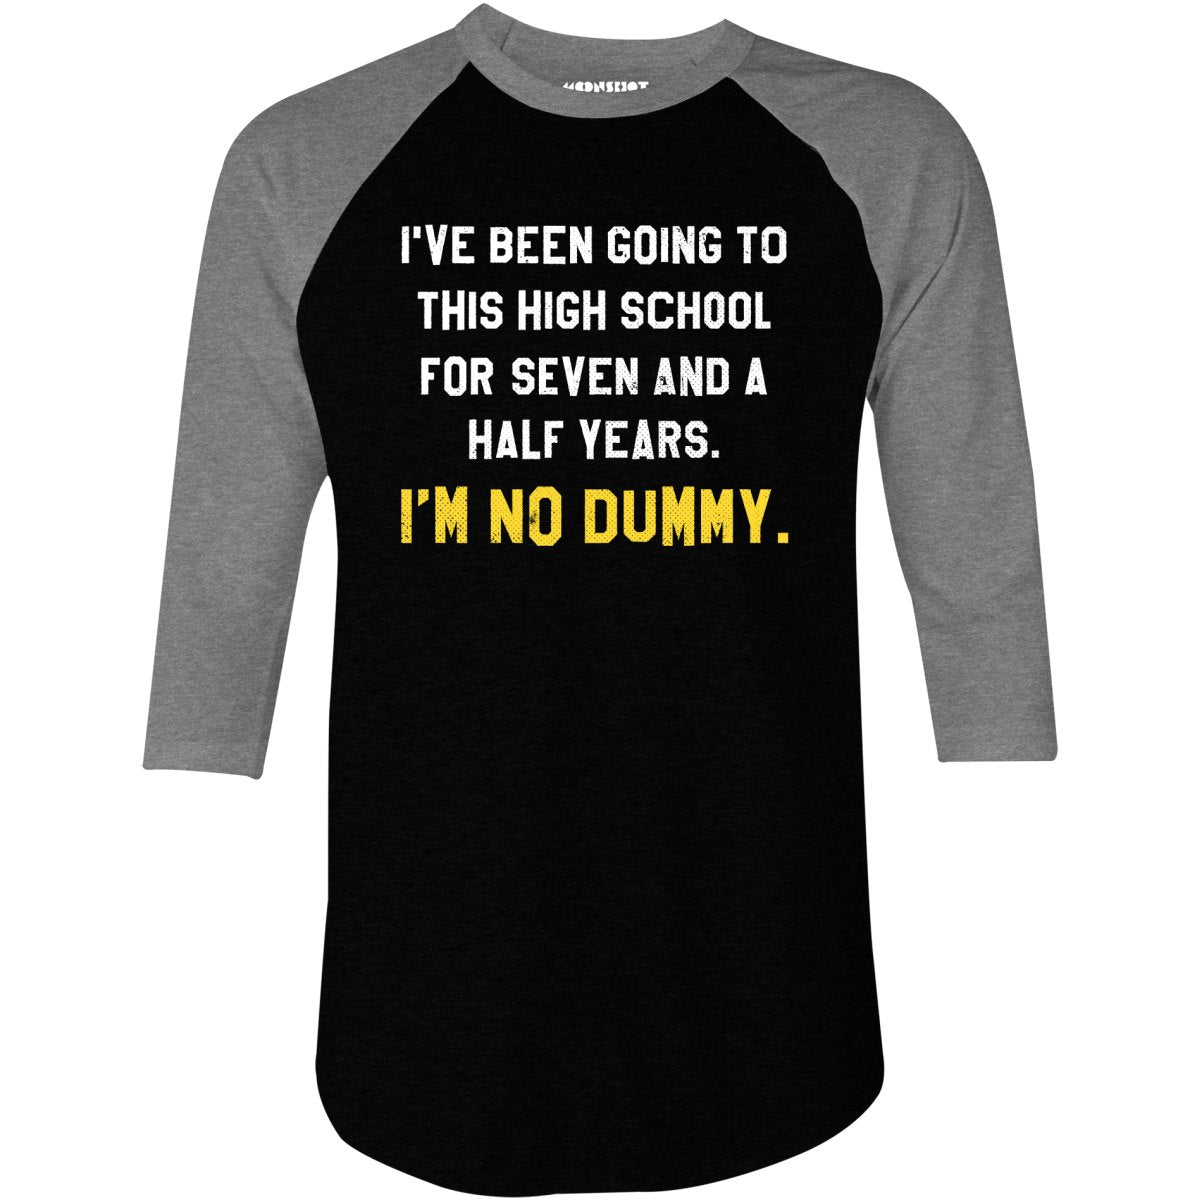 I'm No Dummy - 3/4 Sleeve Raglan T-Shirt